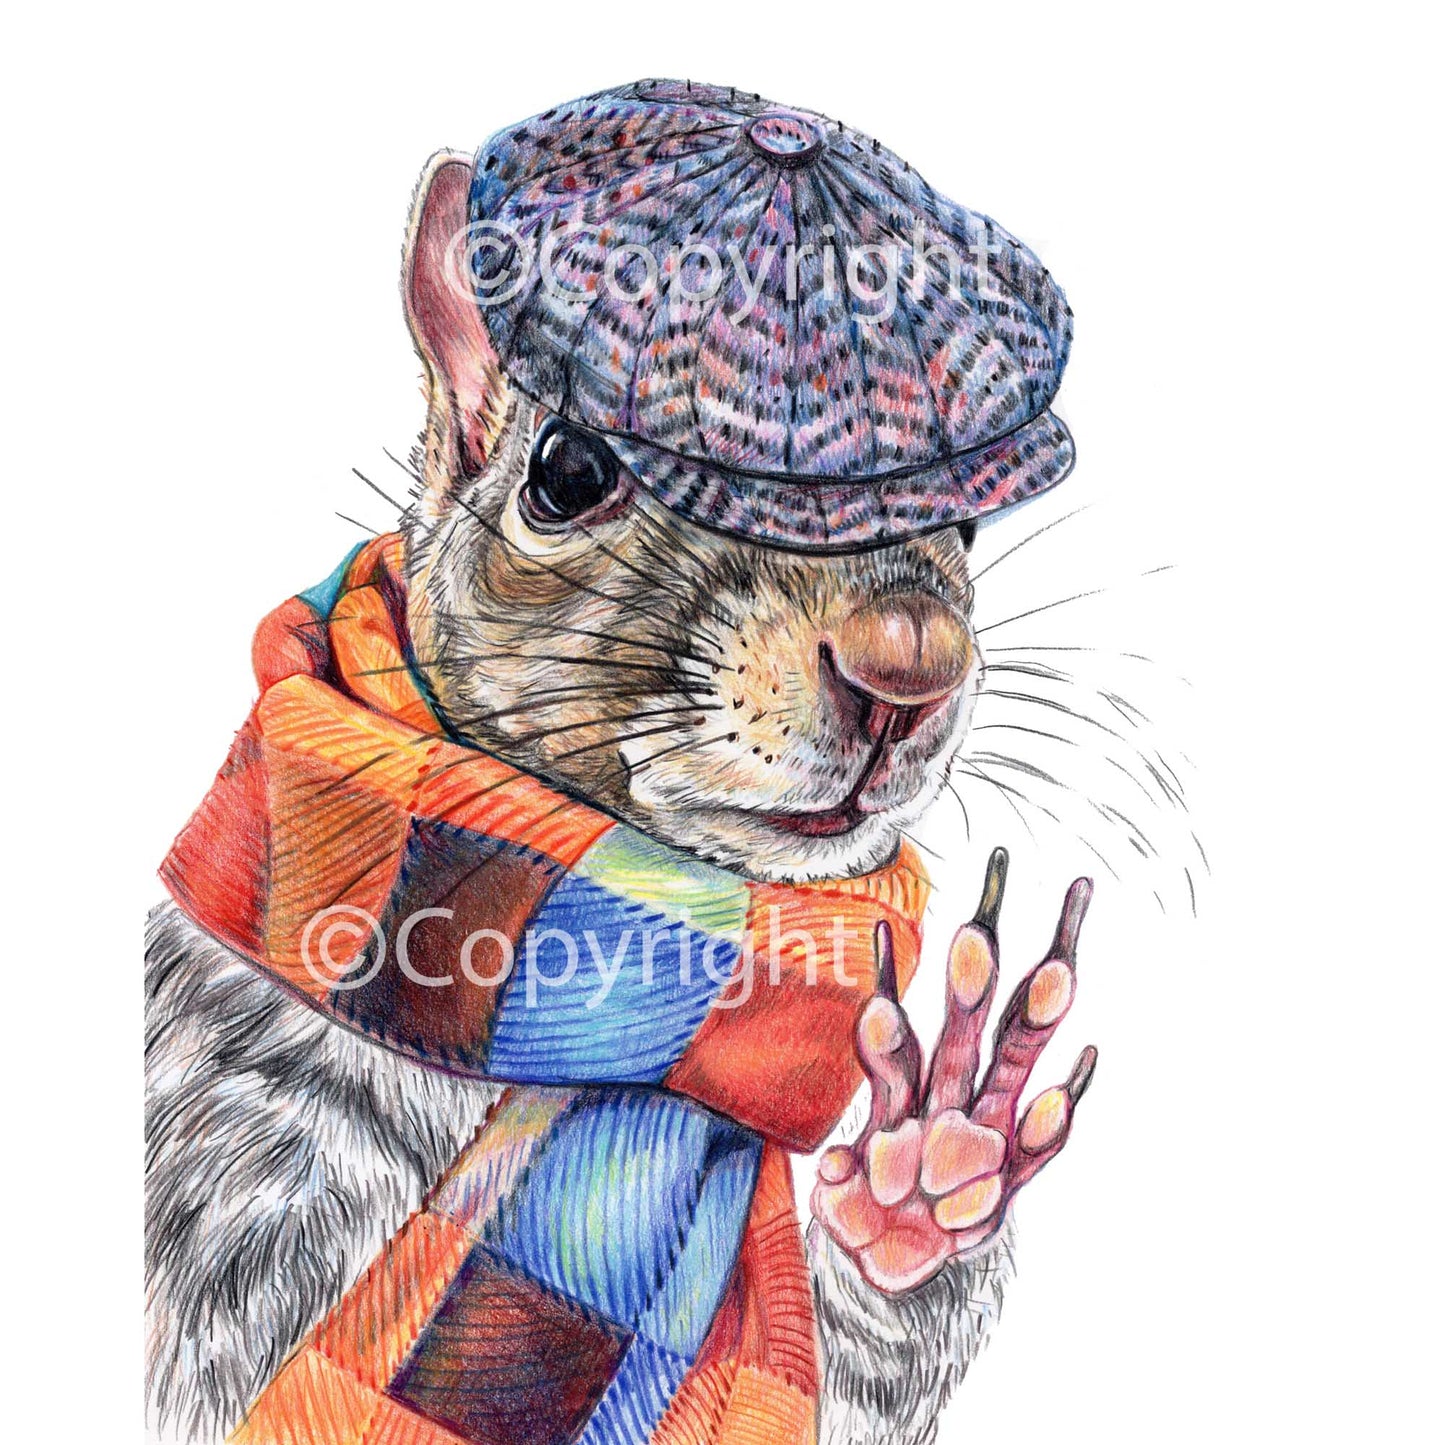 Coloured pencil drawing of a dapper Eastern grey squirrel wearing a newsboy hat and wool scarf. Art by Deidre Wicks